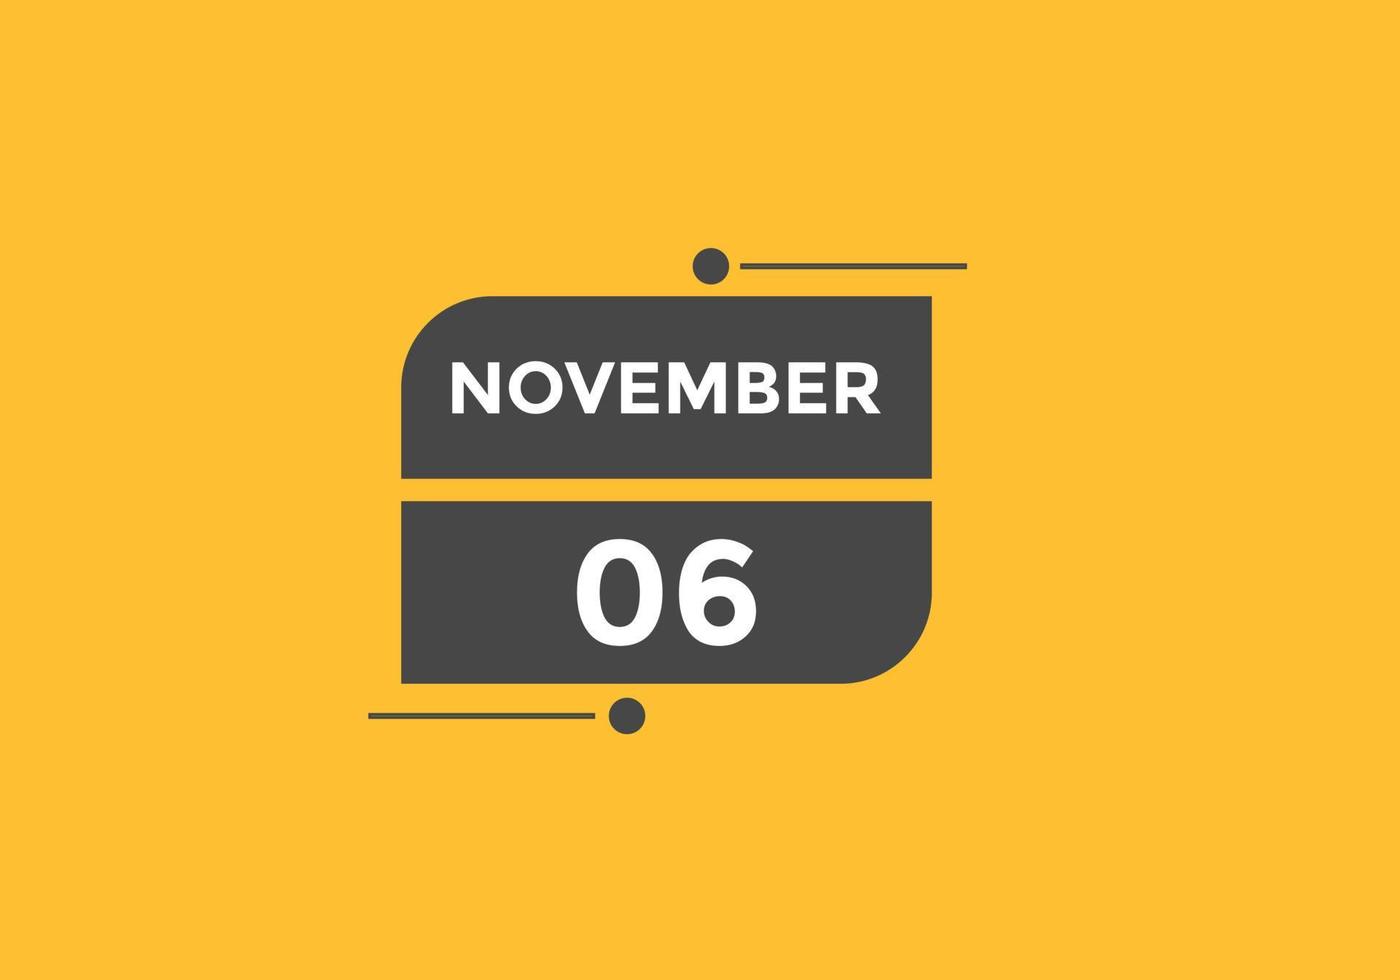 november 6 calendar reminder. 6th november daily calendar icon template. Calendar 6th november icon Design template. Vector illustration